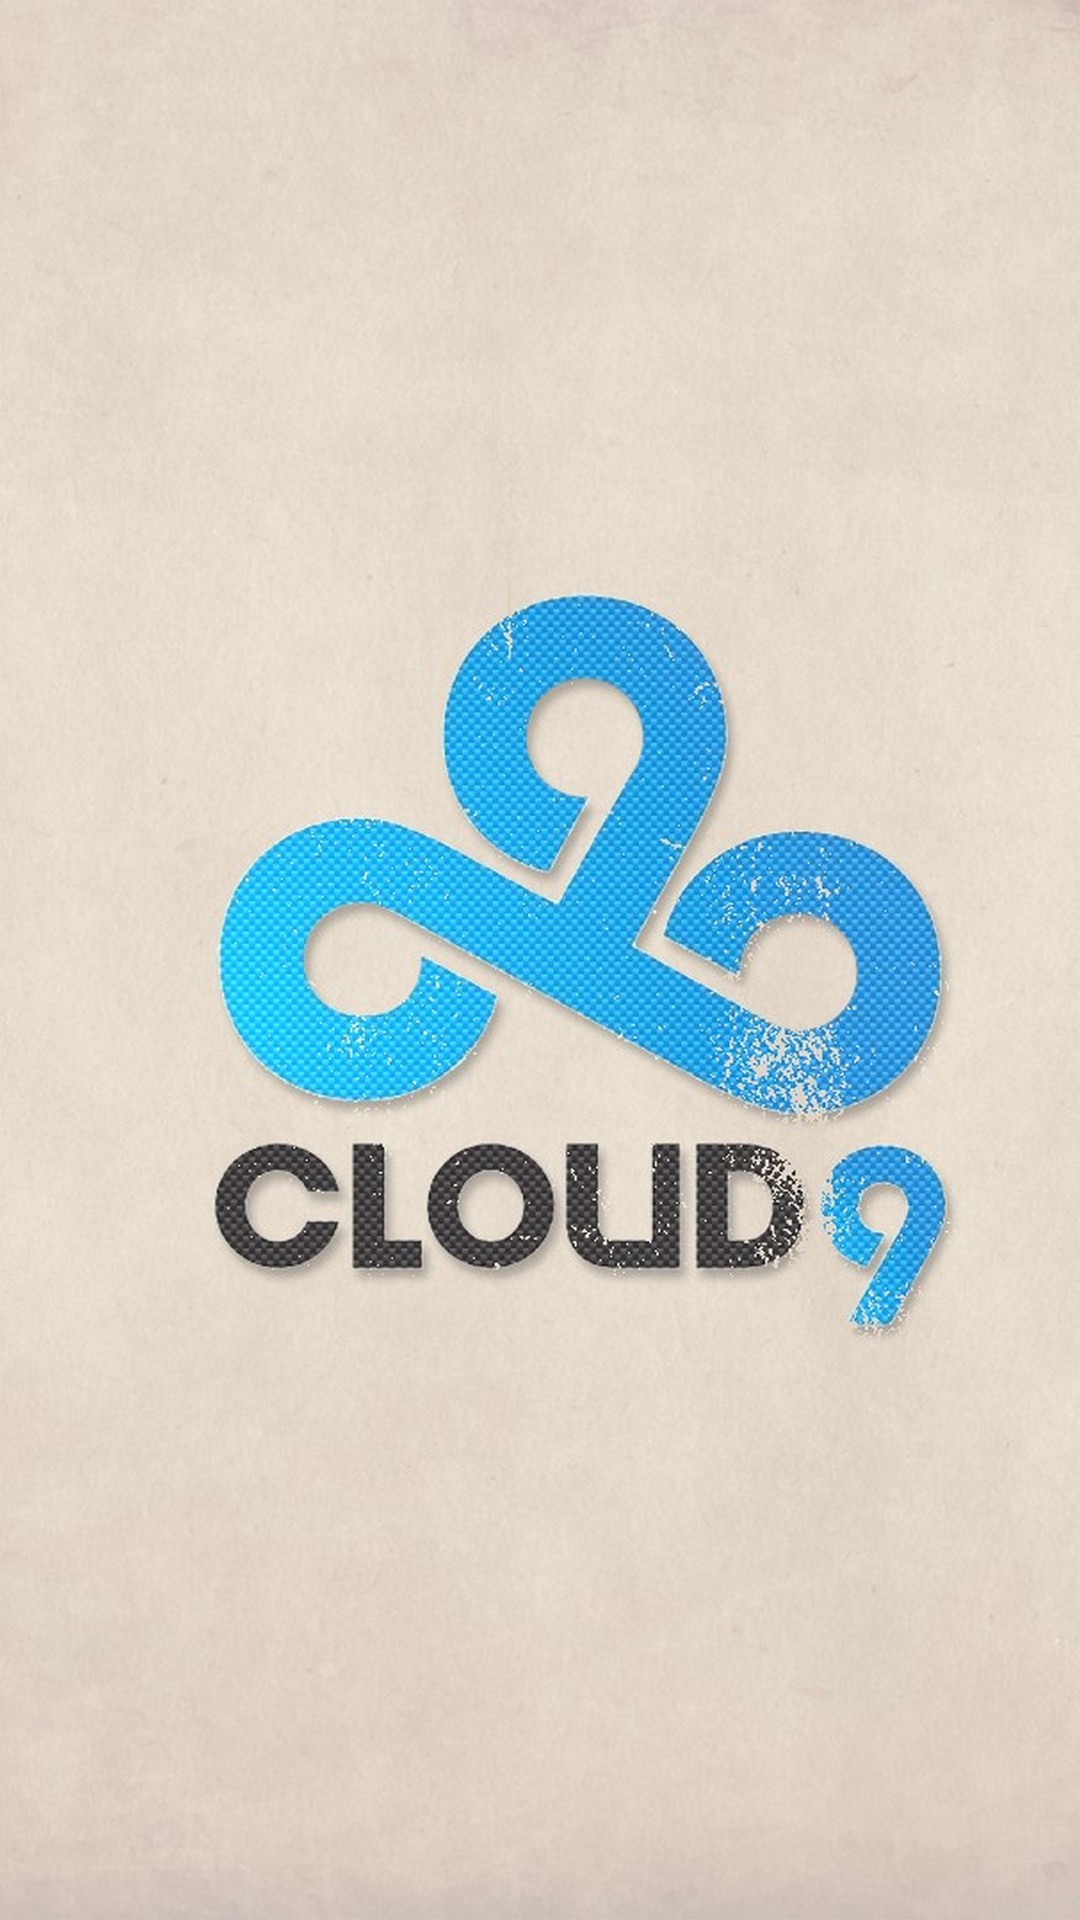 Cloud9 Iphone Wallpapers